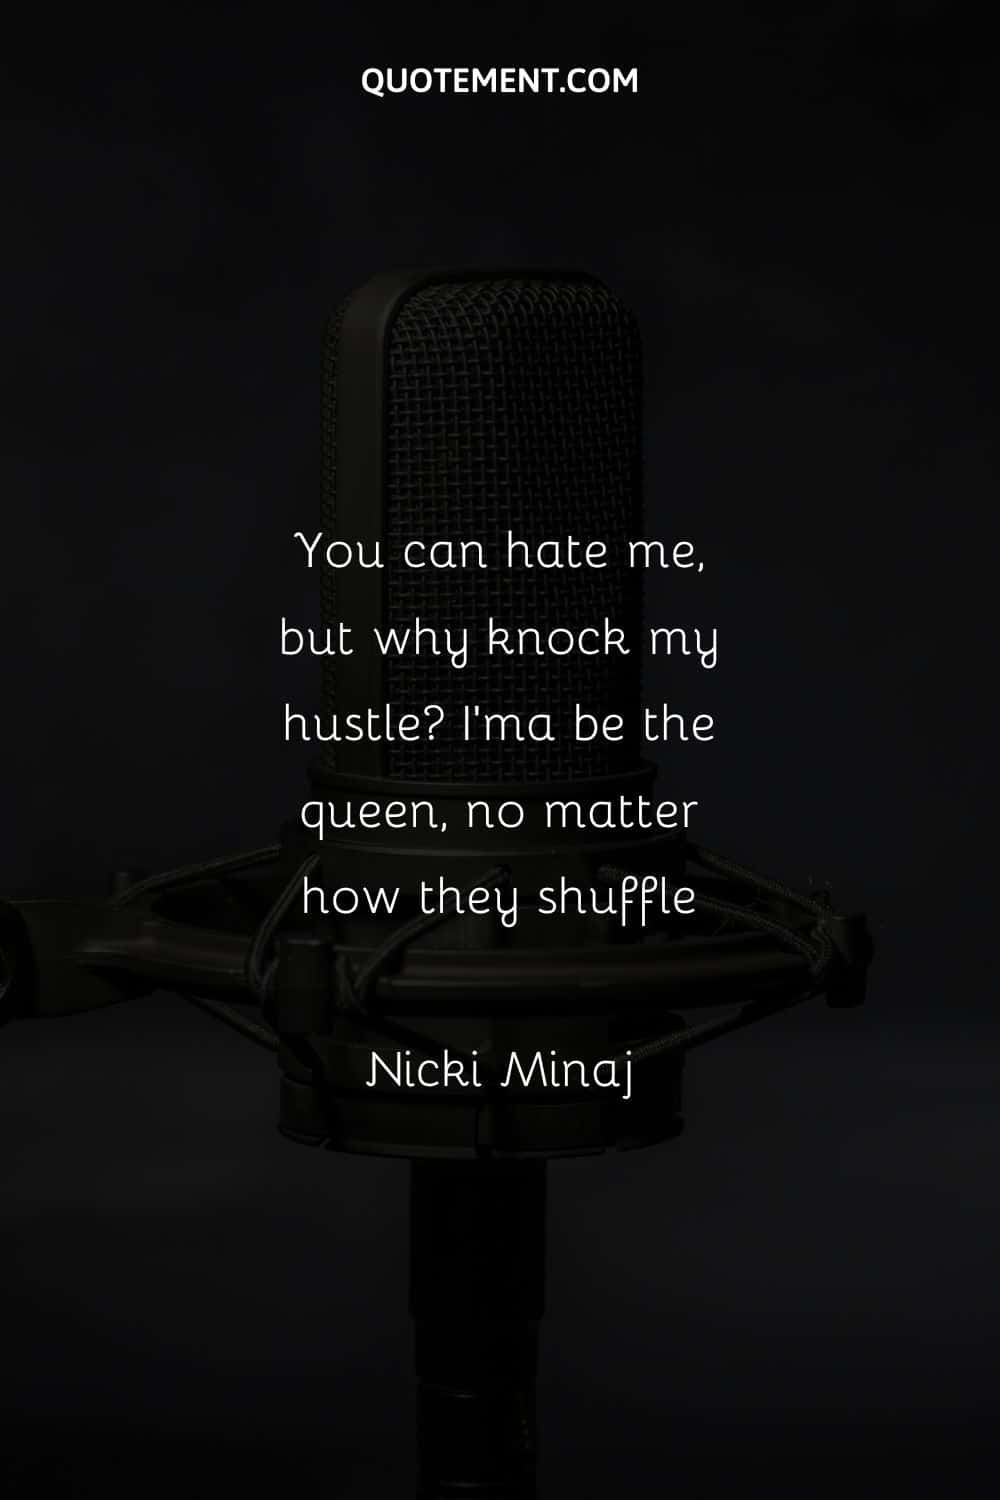 Rap caption inspired by Nicki Minaj and a microphone.
